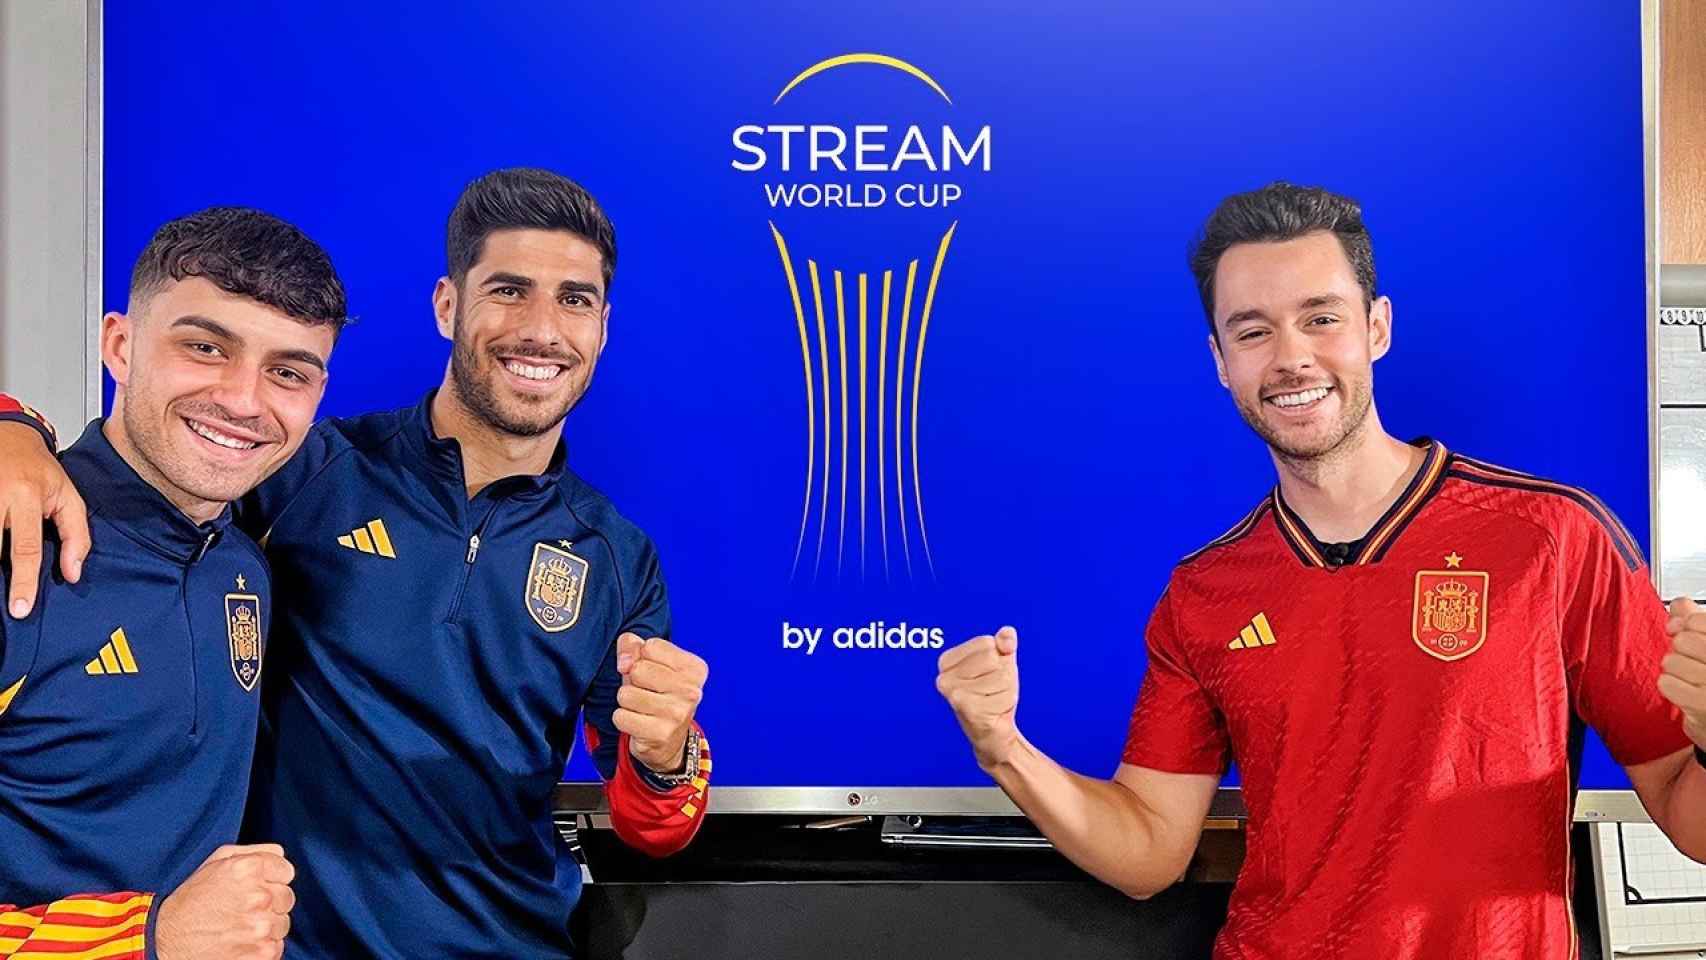 TheGrefg anuncia la Stream World Cup junto a Pedri y Marco Asensio antes del Mundial / REDES